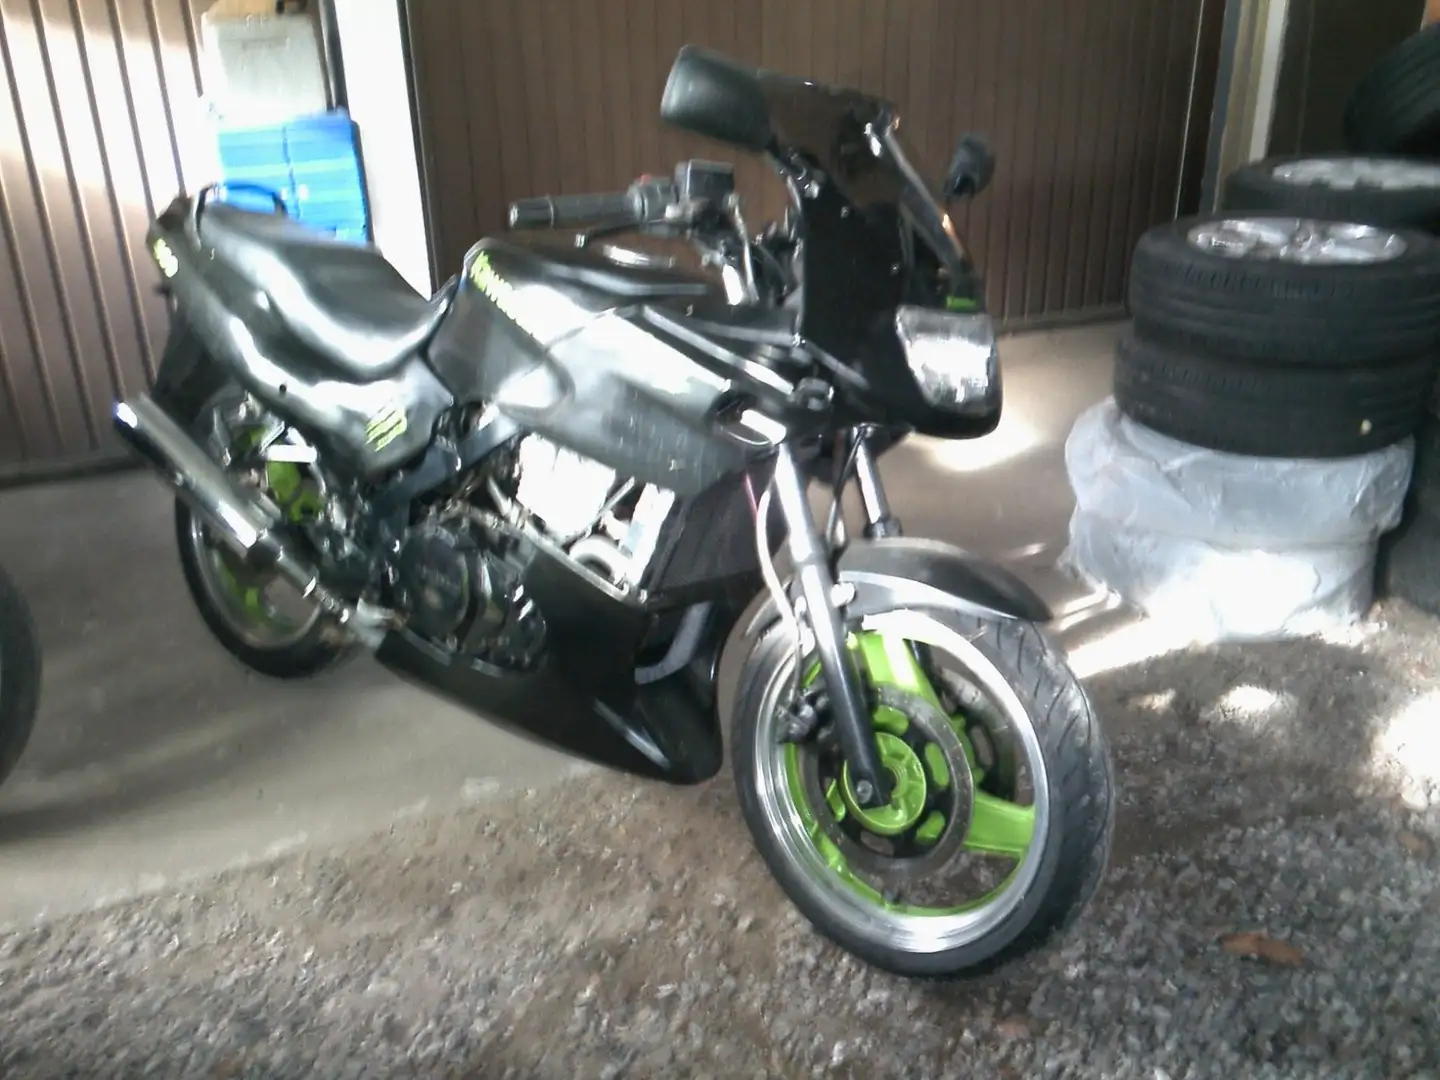 Kawasaki GPZ 500 S in Schwarz Black - 1